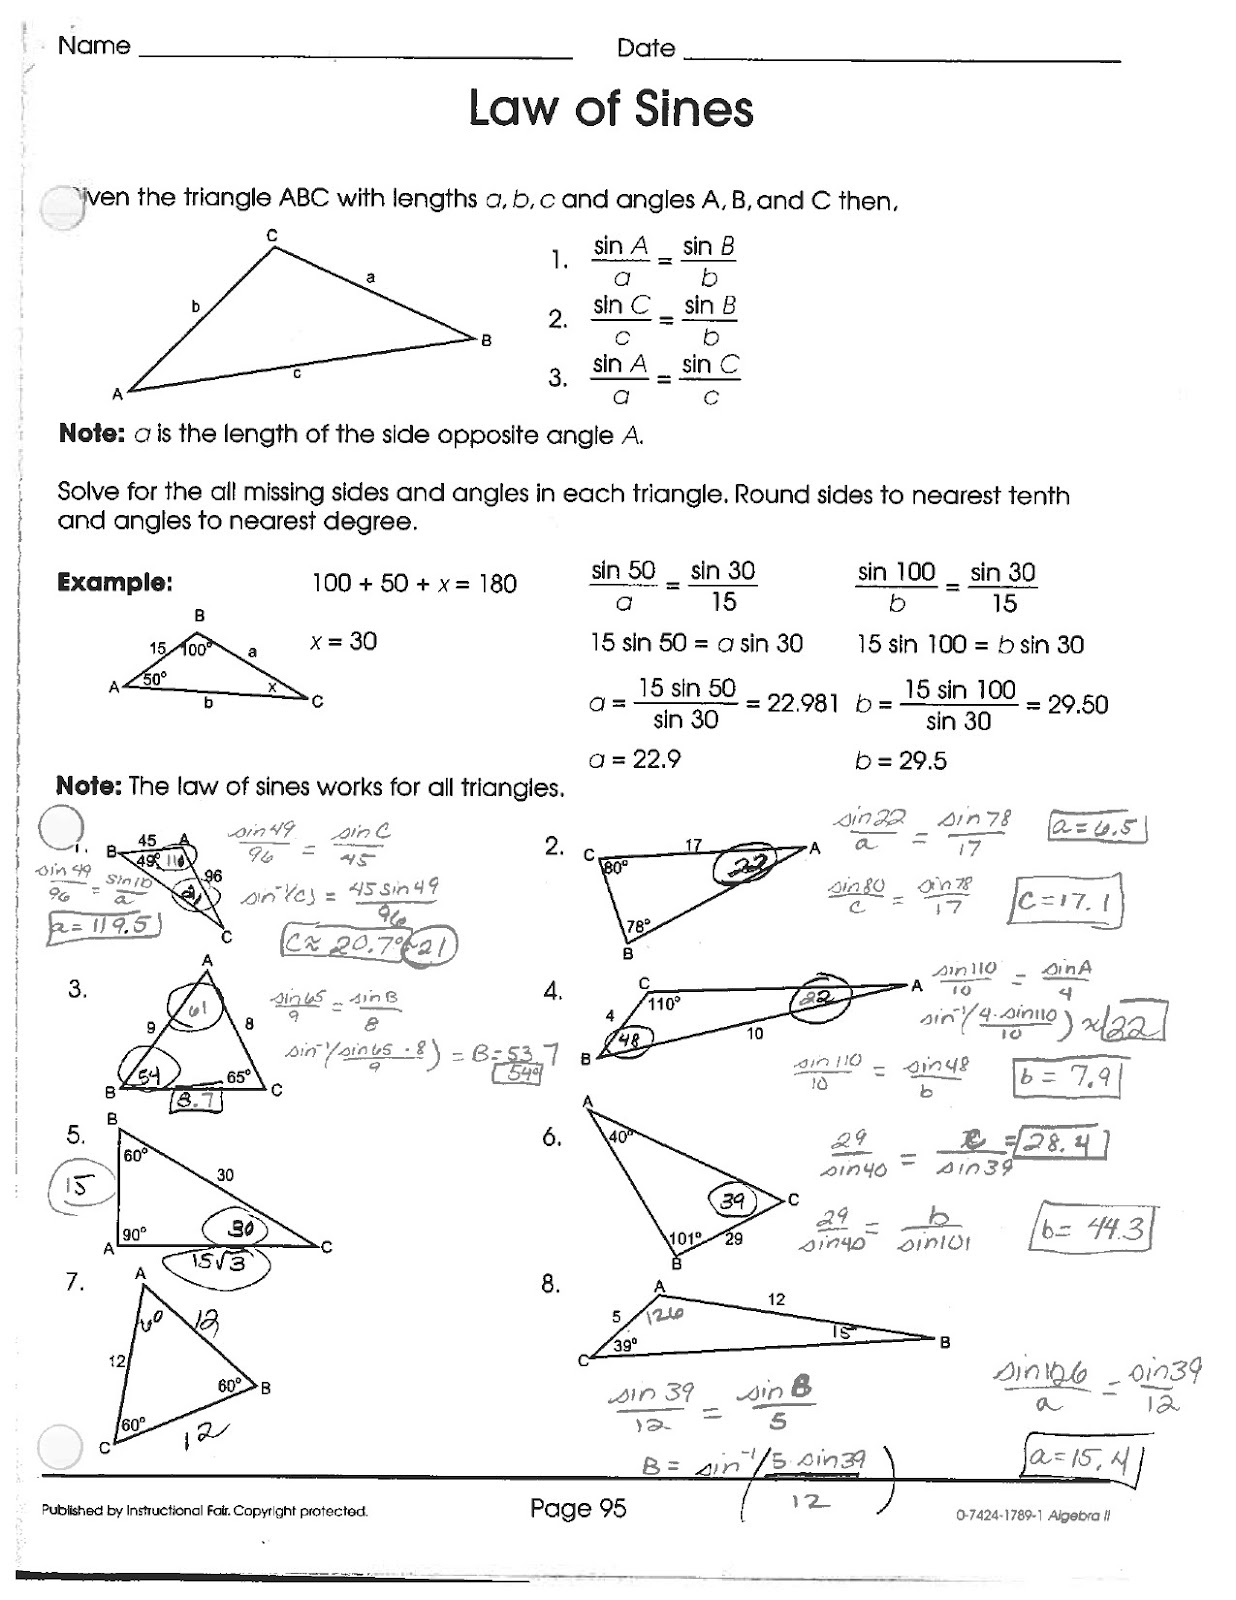 unit 5 trigonometric functions homework 8 law of cosines answers